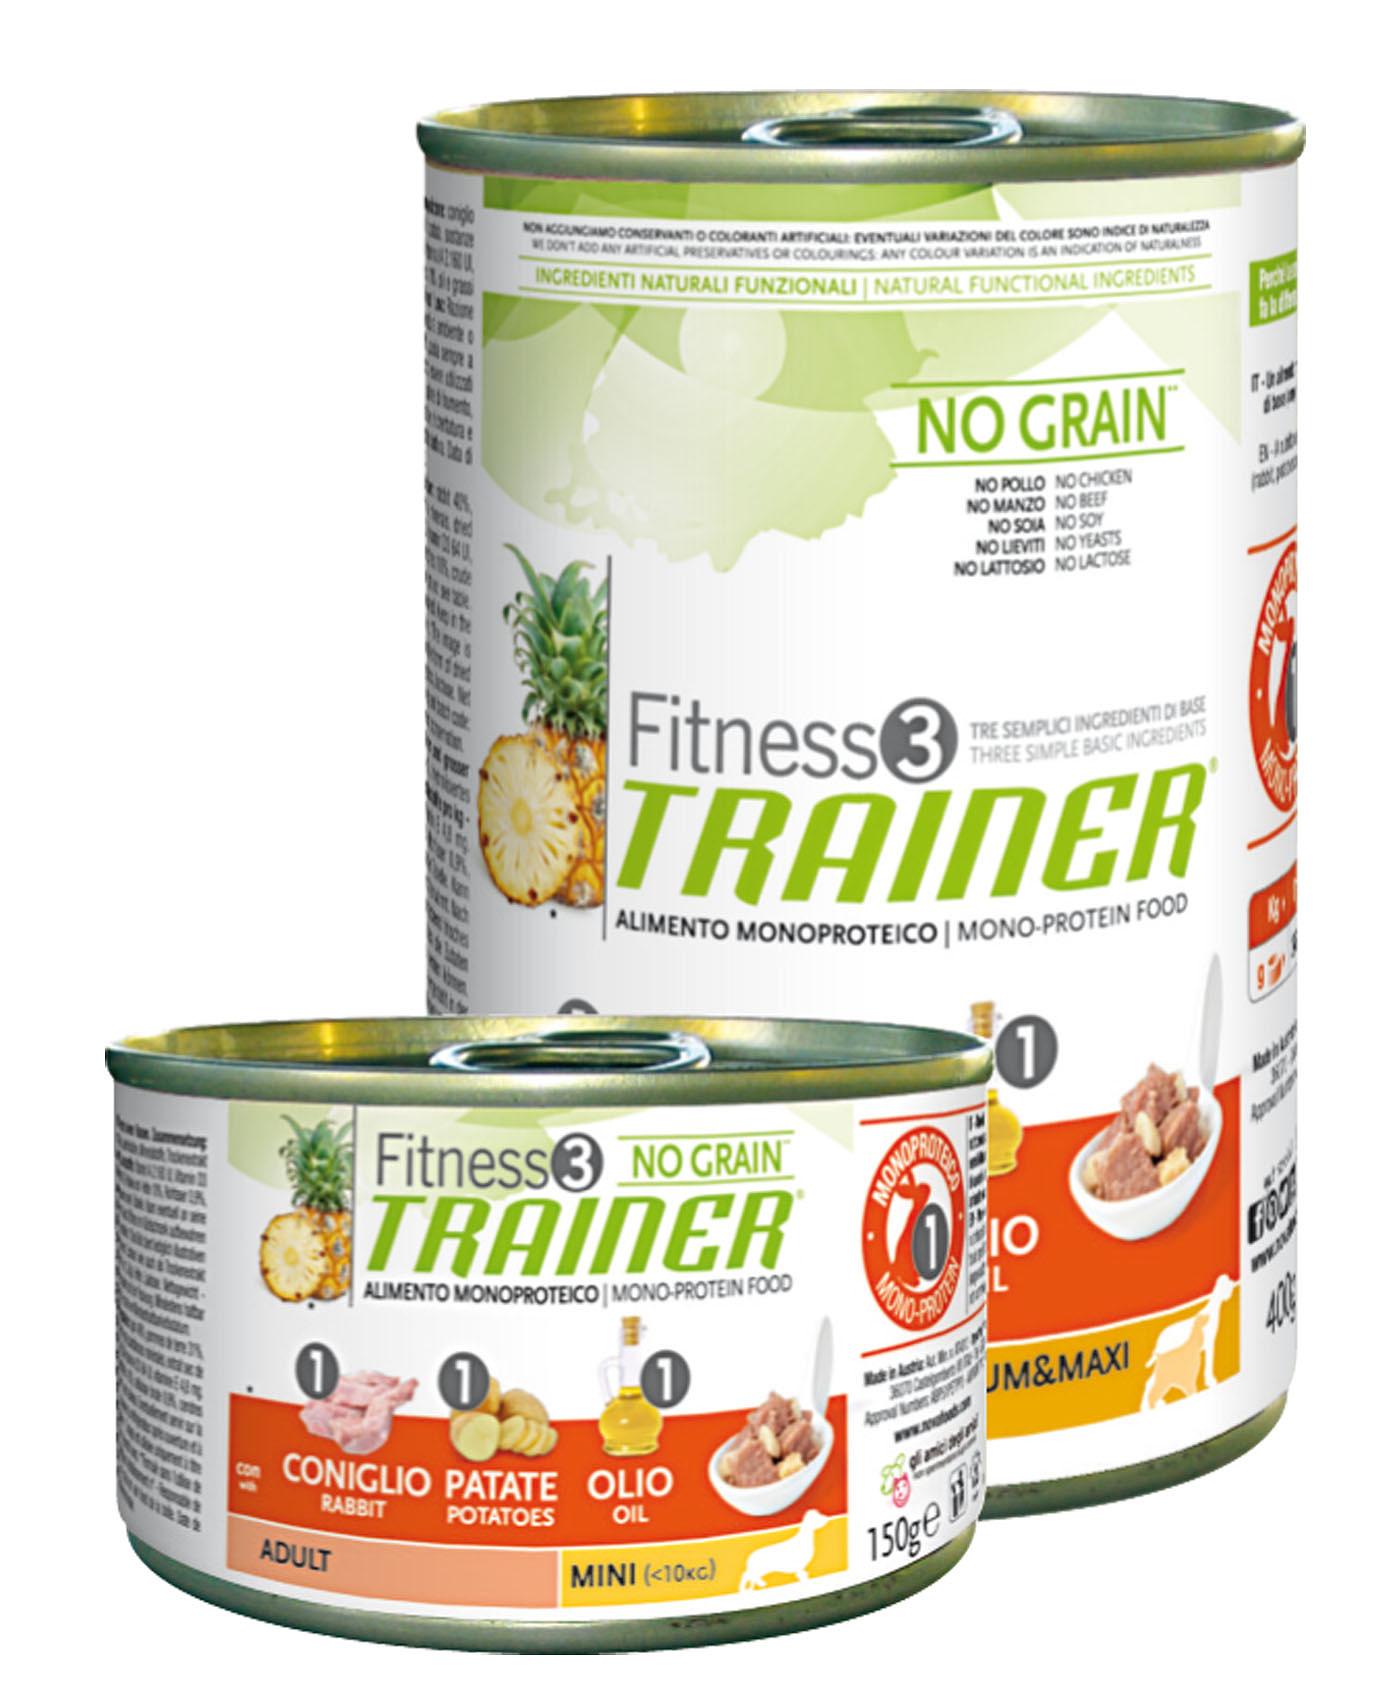 Trainer Fitness3 Adult, No Grain, Rabbit & Potatoes